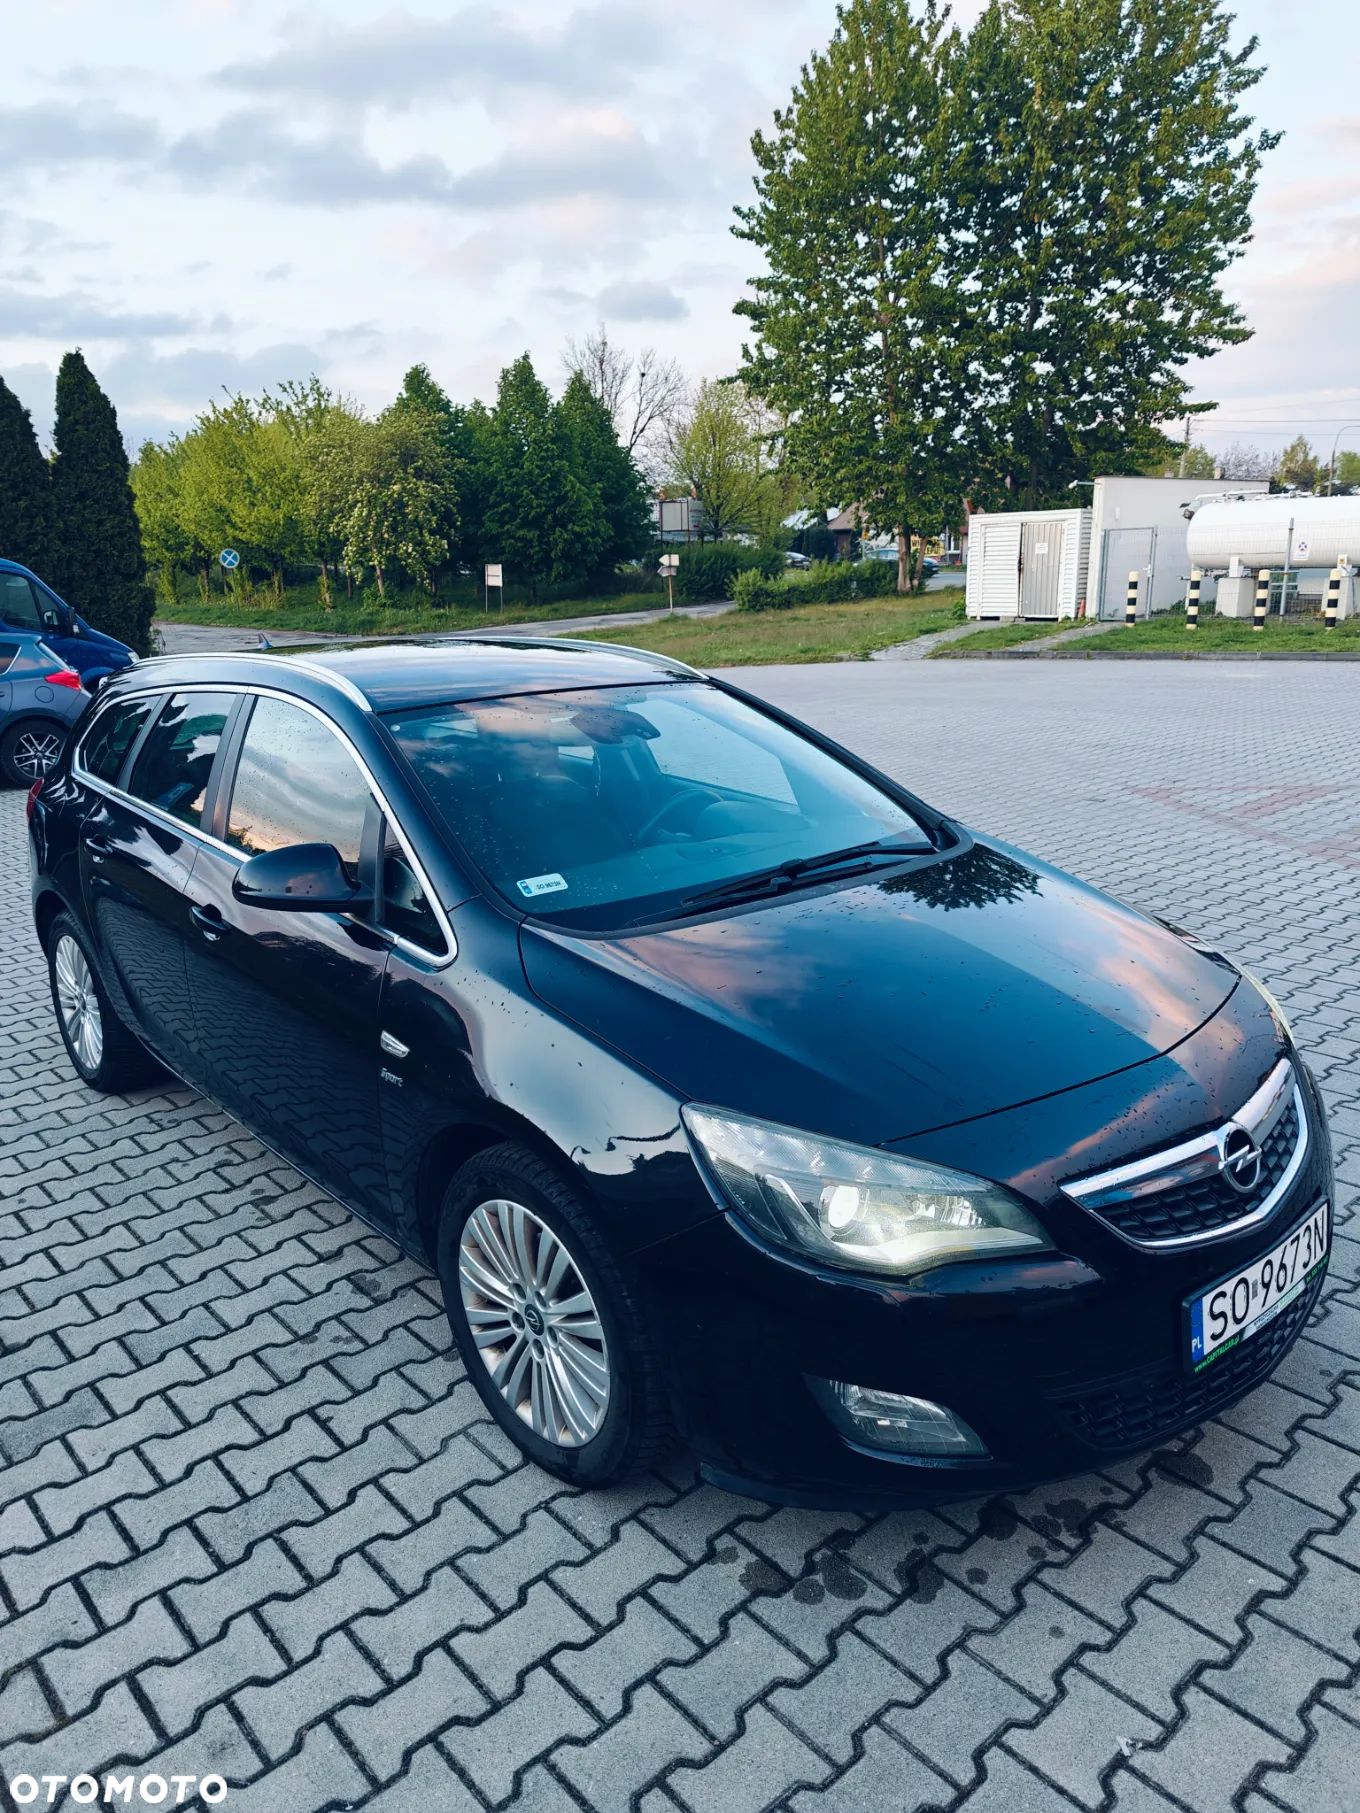 Opel Astra IV 1.7 CDTI Cosmo - 1